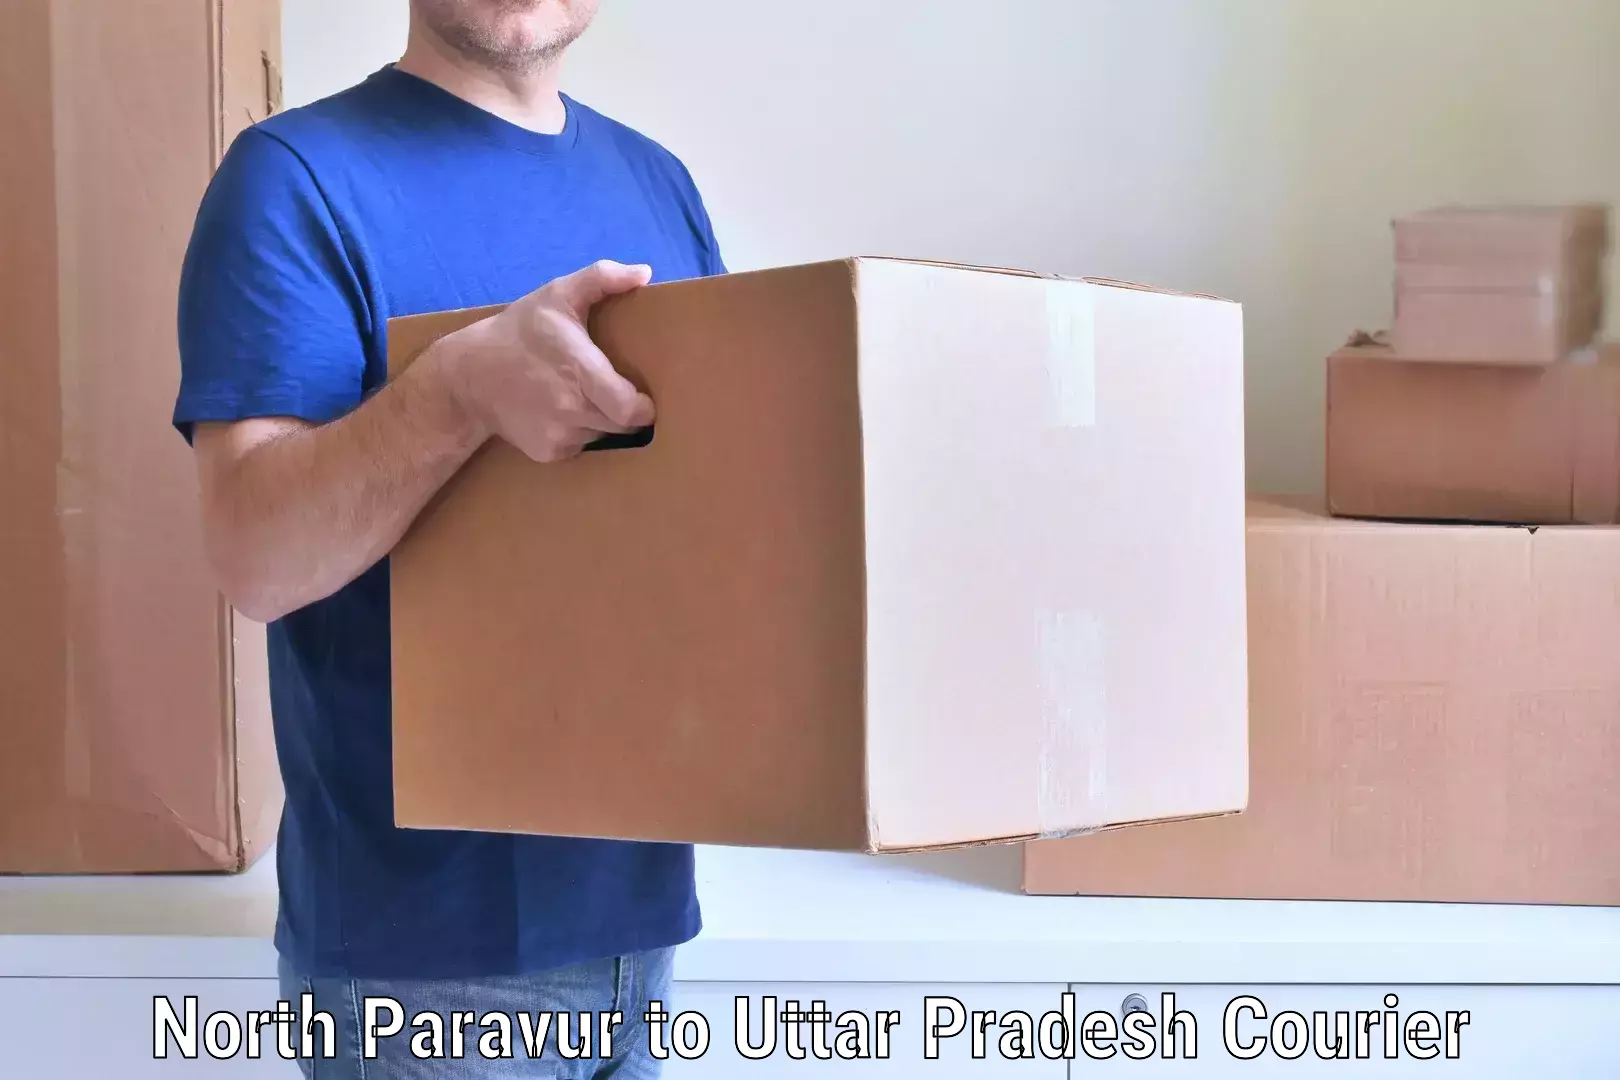 Efficient moving company North Paravur to Uttar Pradesh